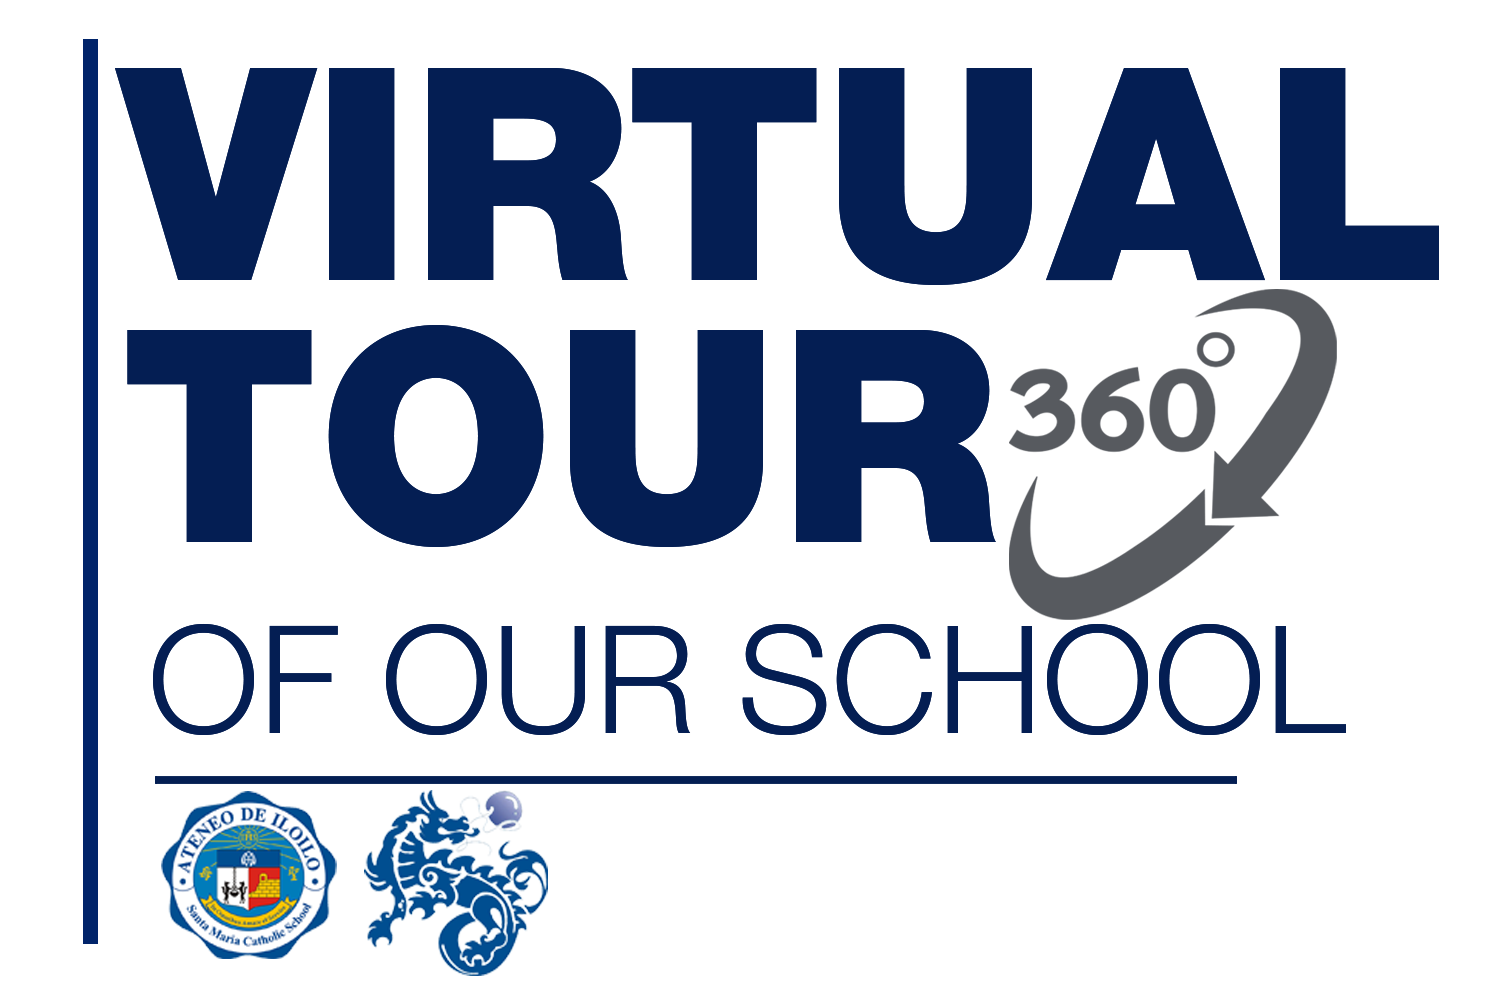 Explore our Virtual Tour